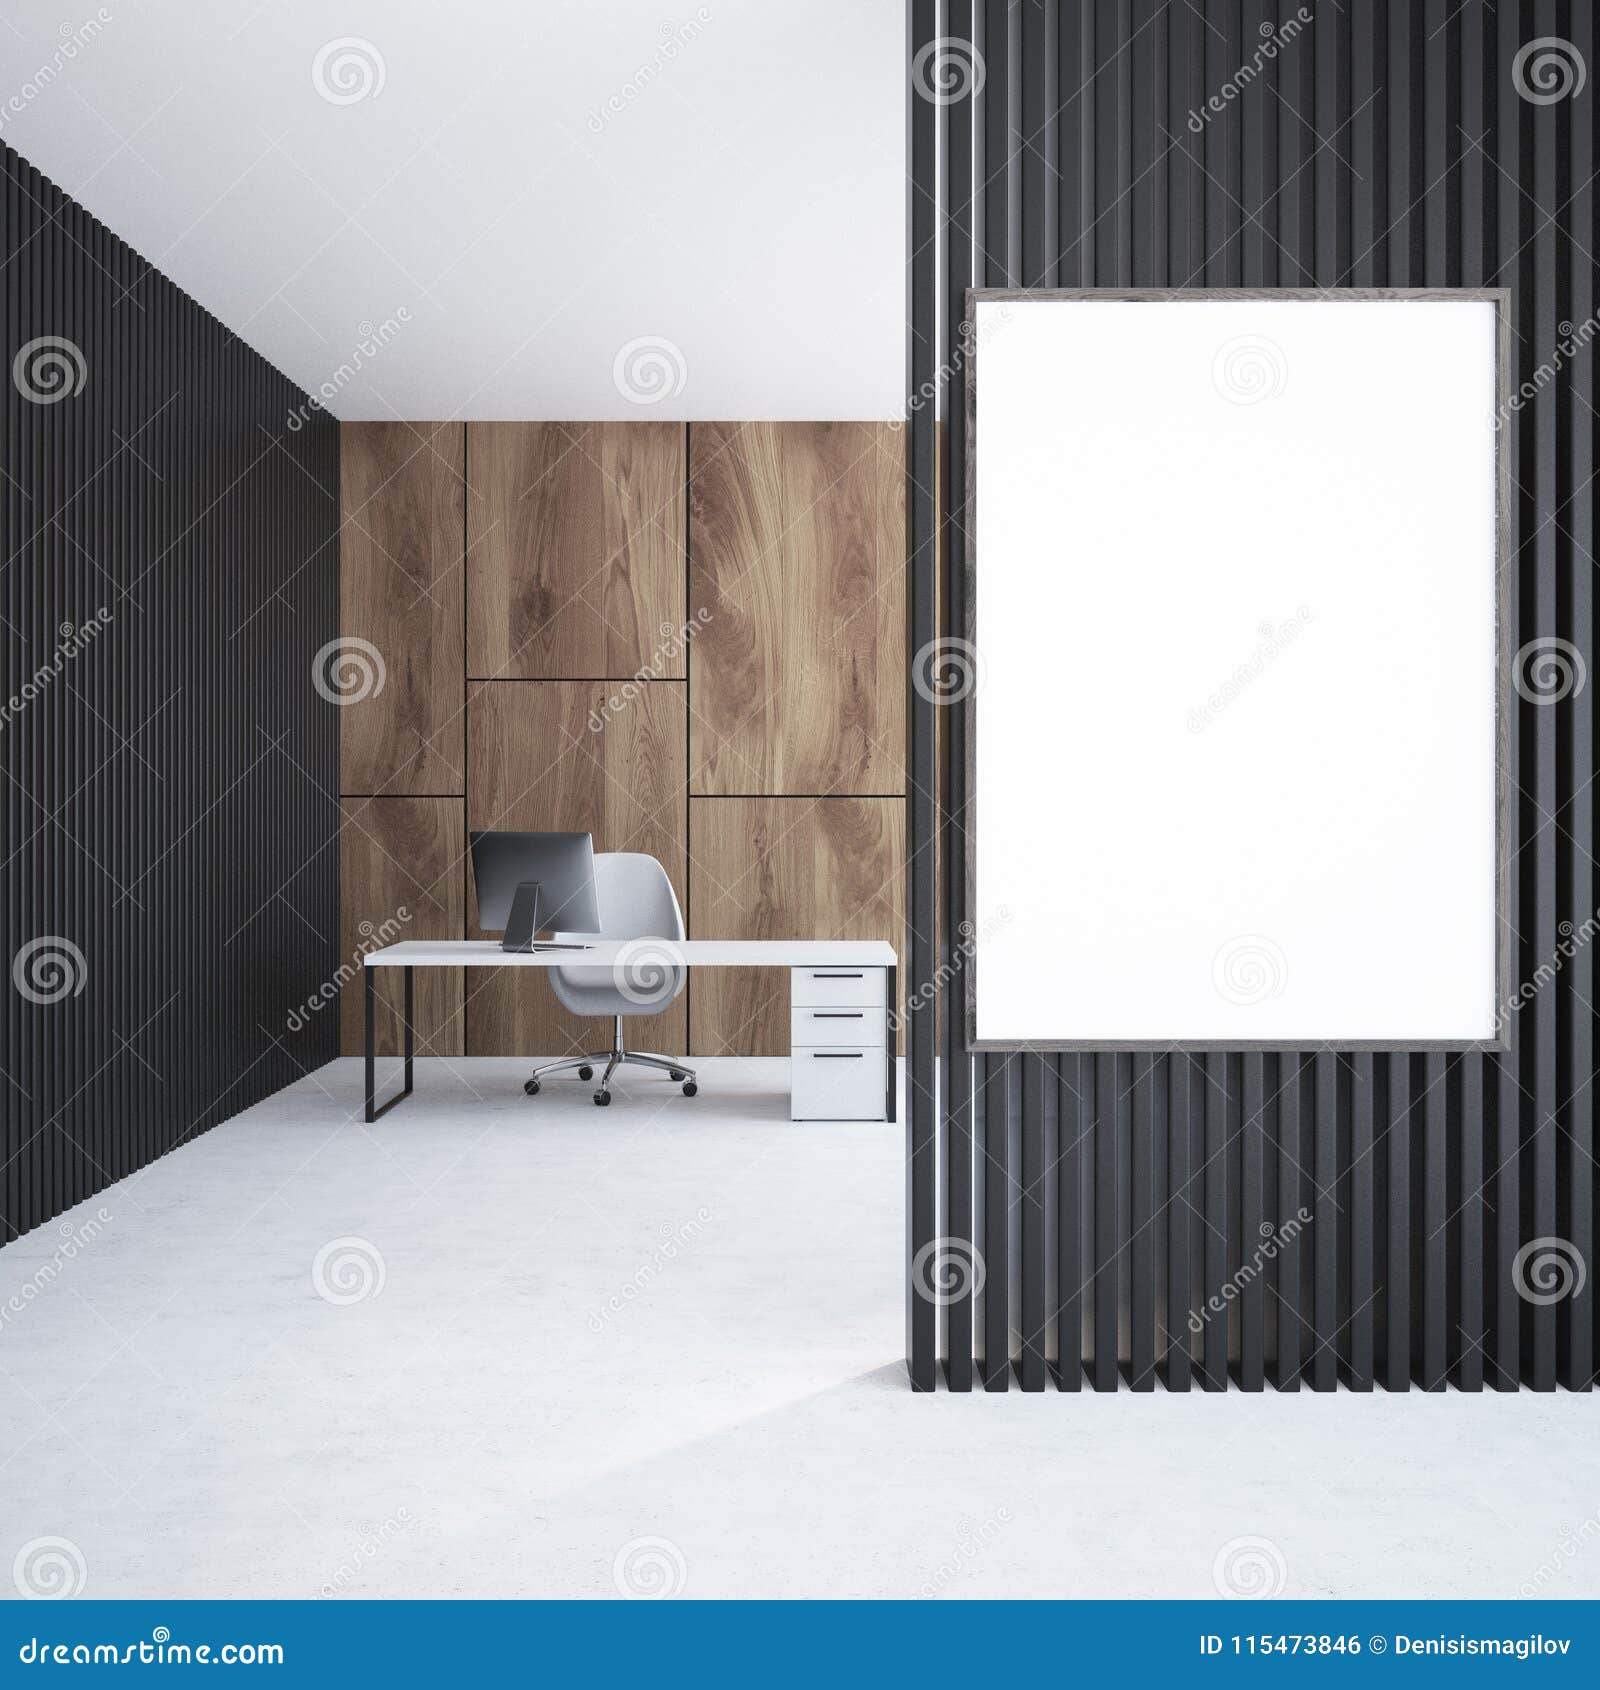 Black Wooden Wall Boss Office Interior Poster Stock